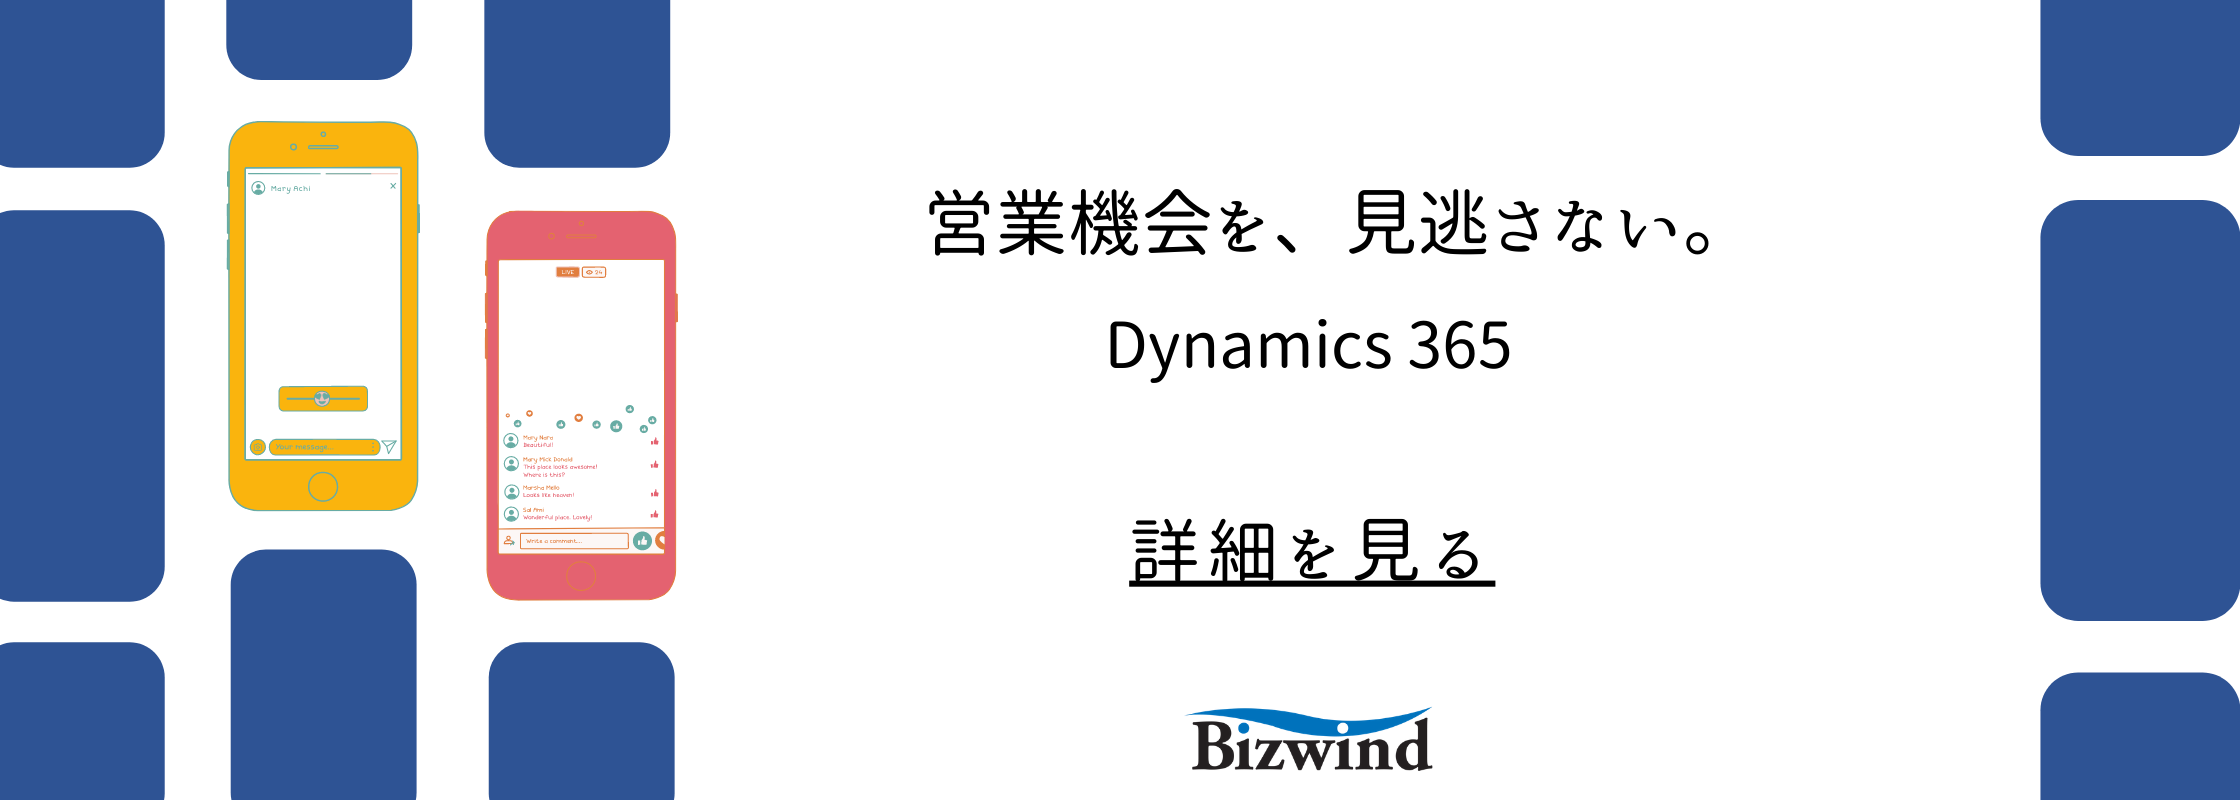 Dynamics365についてのバナー